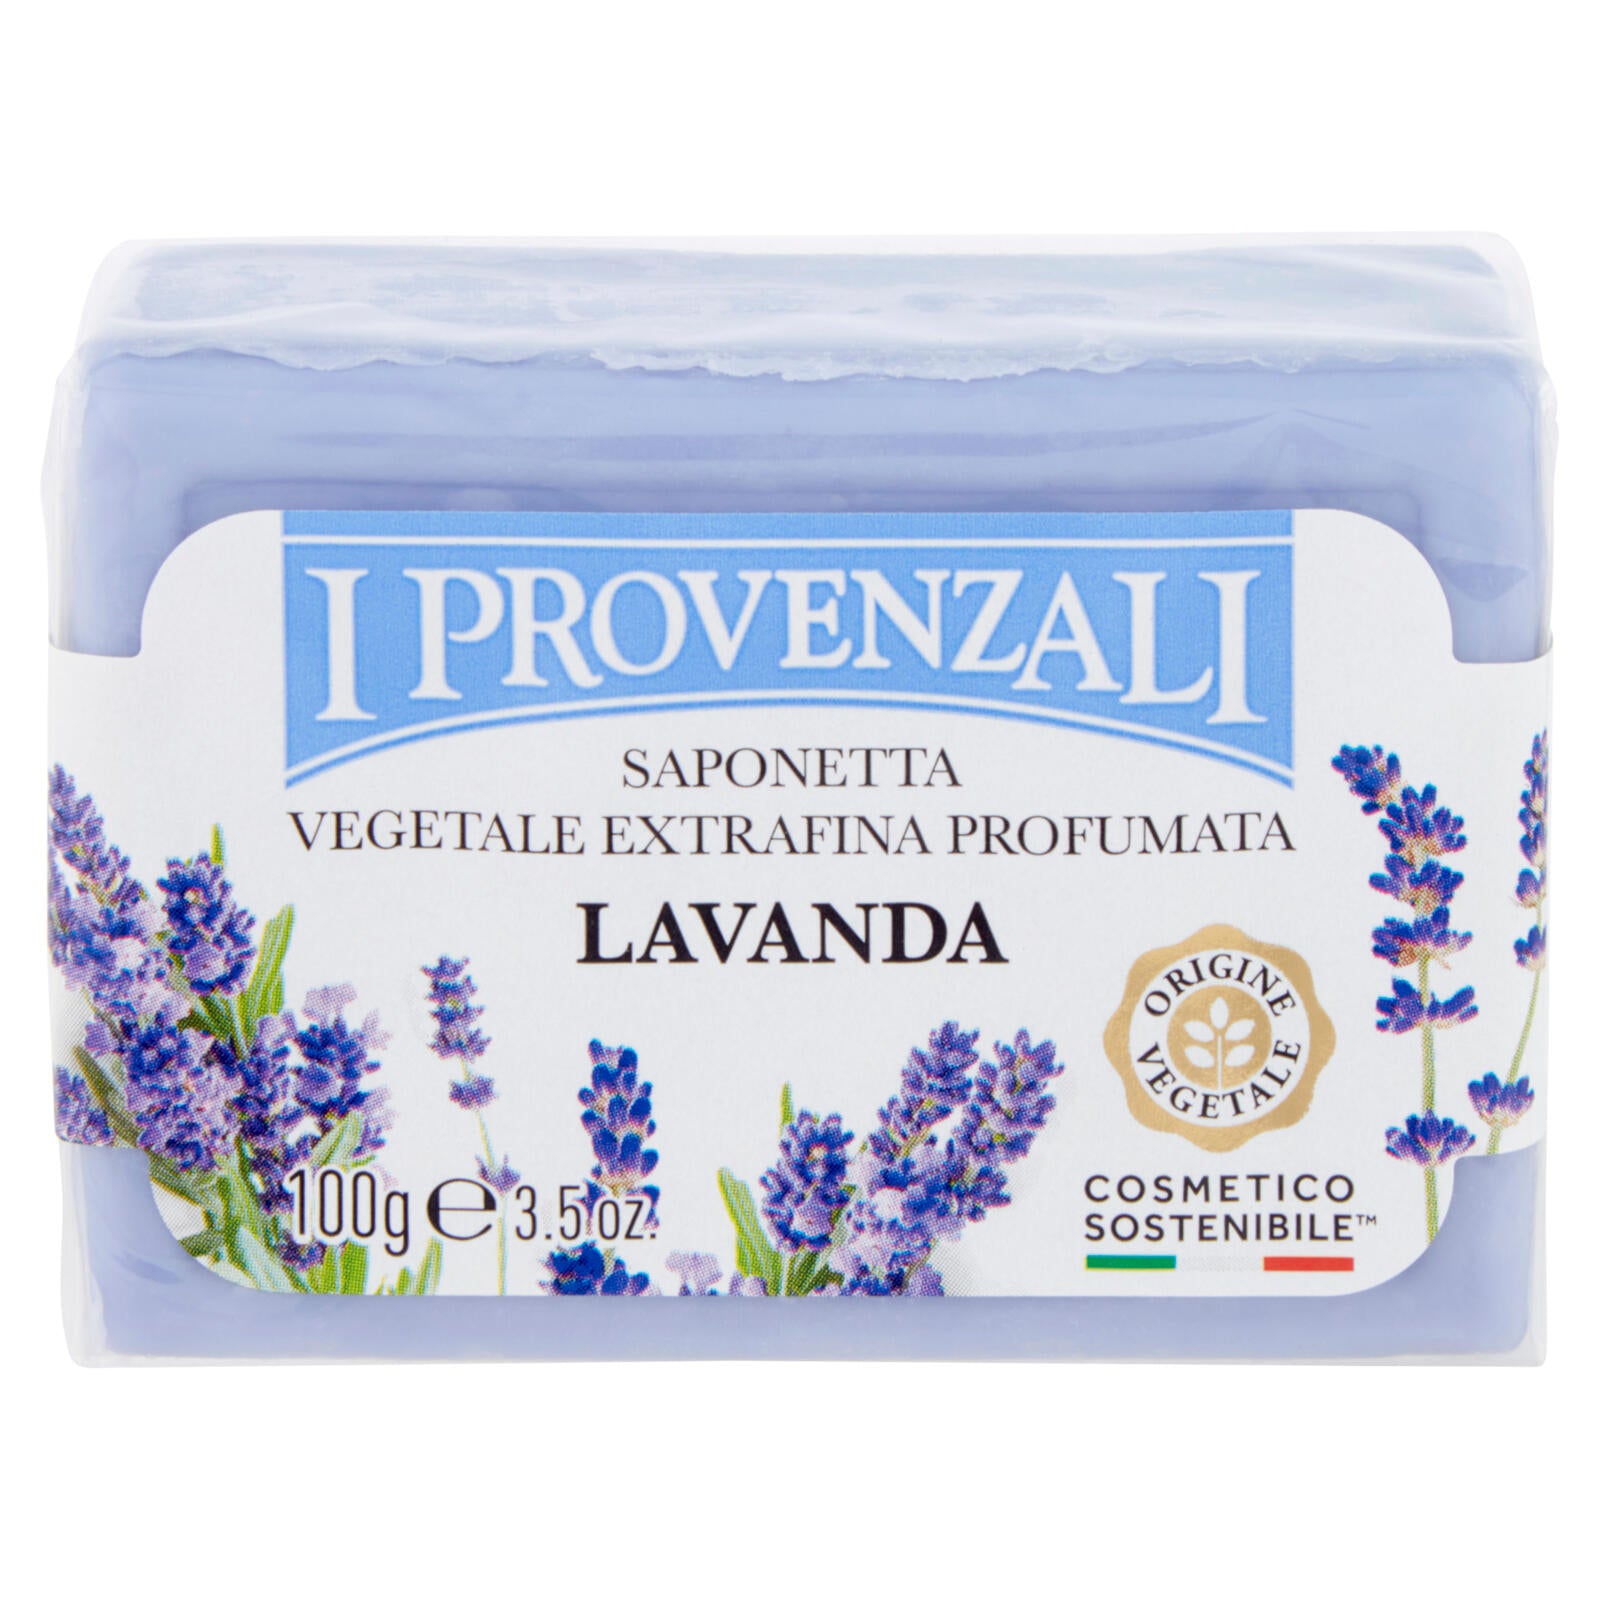 I Provenzali Saponetta Vegetale Extrafina Profumata Lavanda 100 g